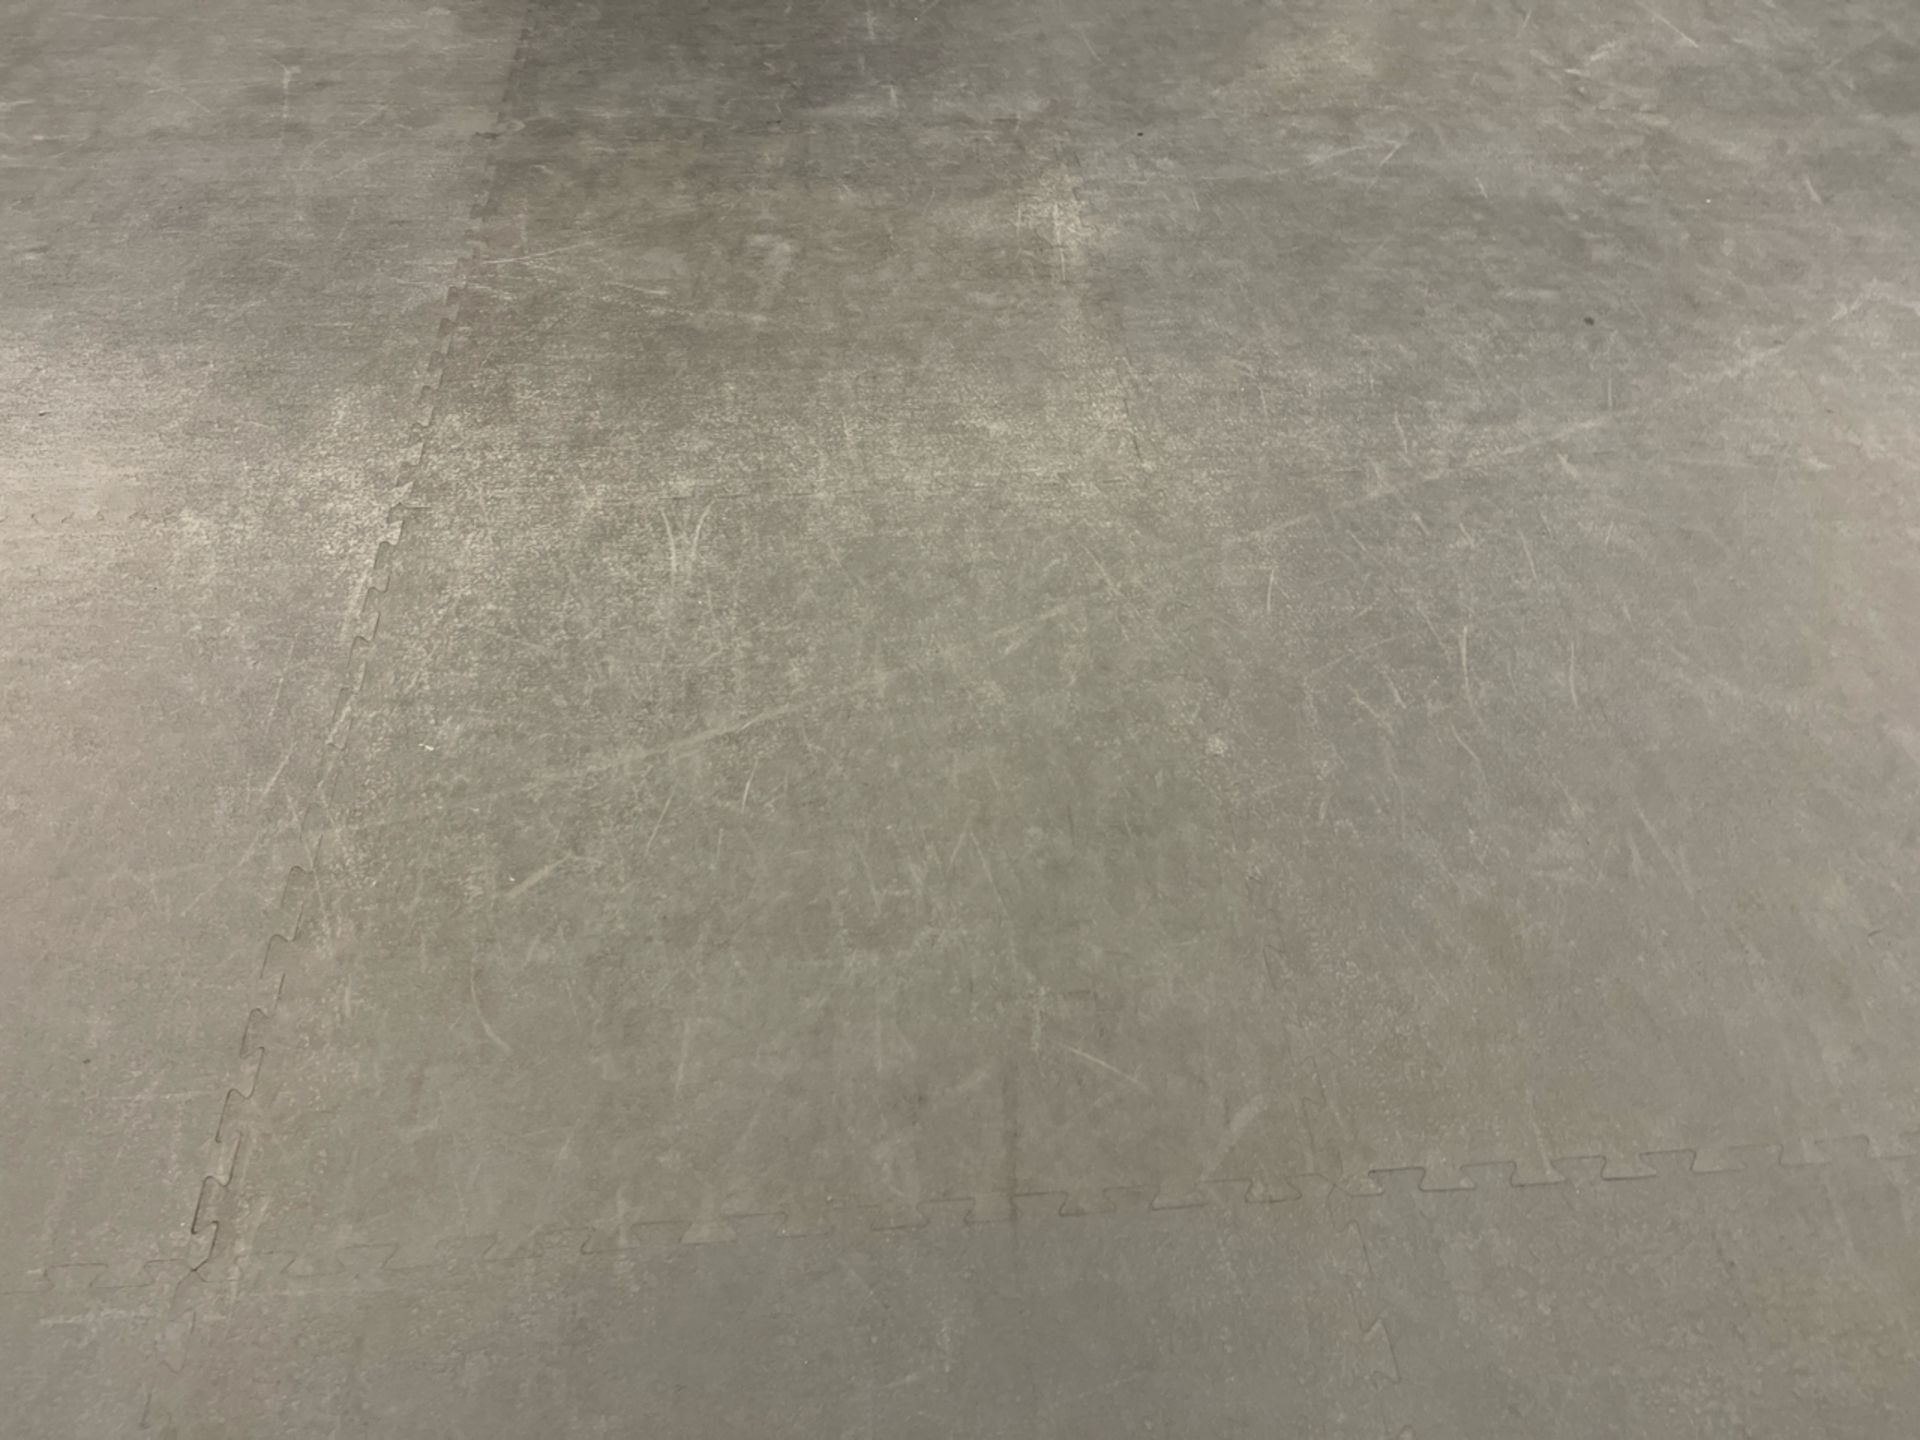 Approximately 50 Grey Interlocking Gym Floor Tiles - Image 2 of 5